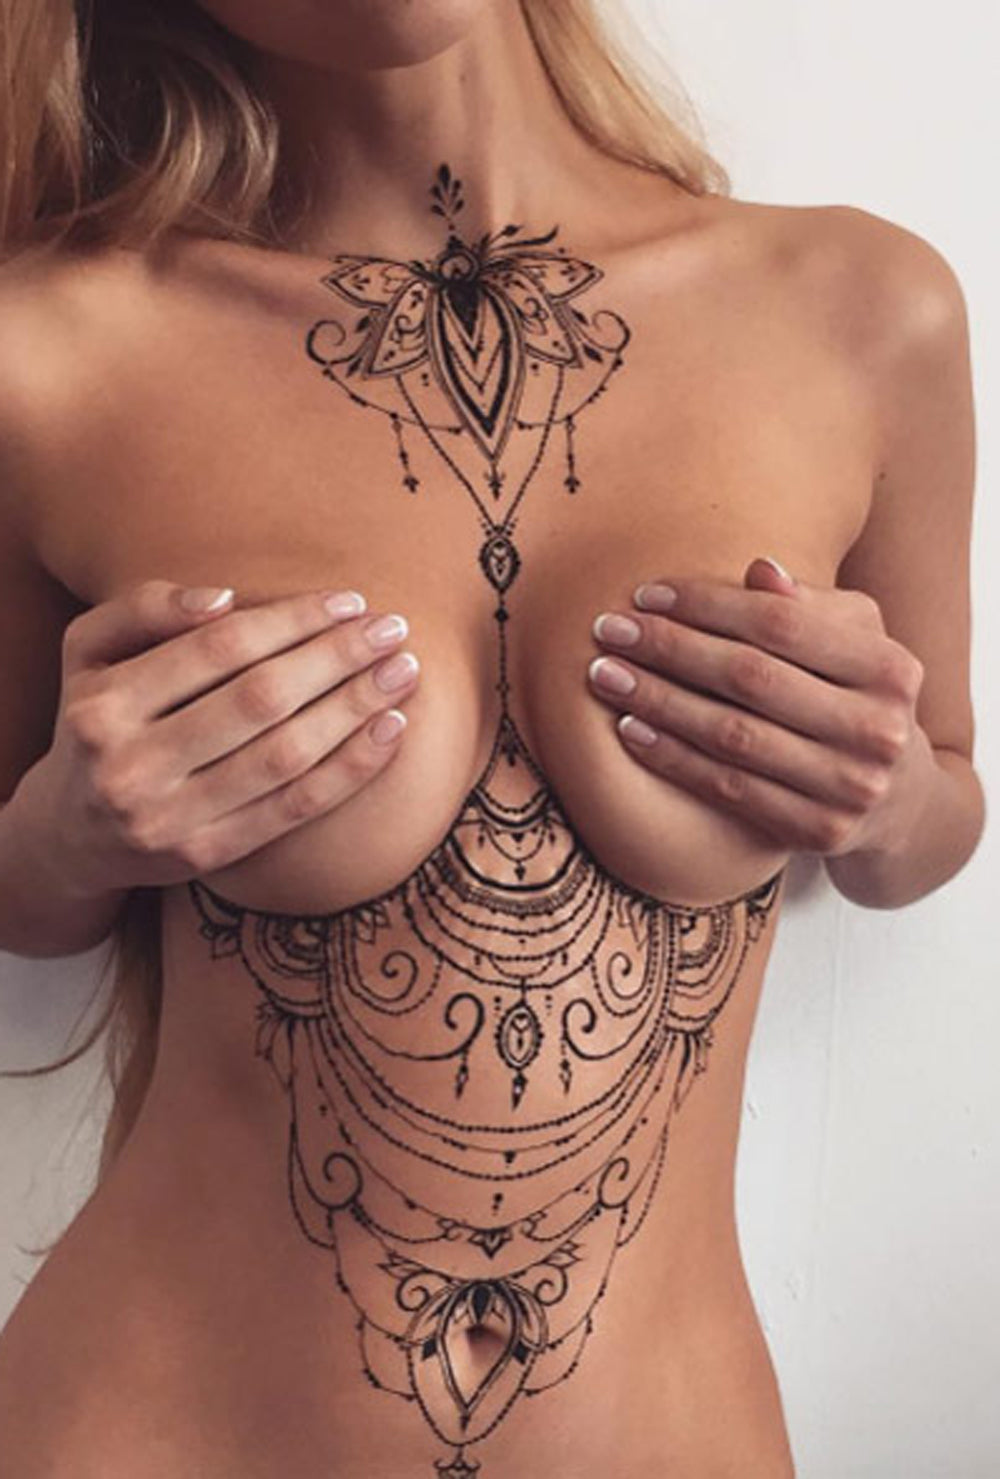 Lace Chandelier Sternum Tattoo Ideas for Women - Tribal Bohemian Lotus Chest Tatt -  Ideas de tatuaje de esternón de araña de encaje para mujeres - www.MyBodiArt.com